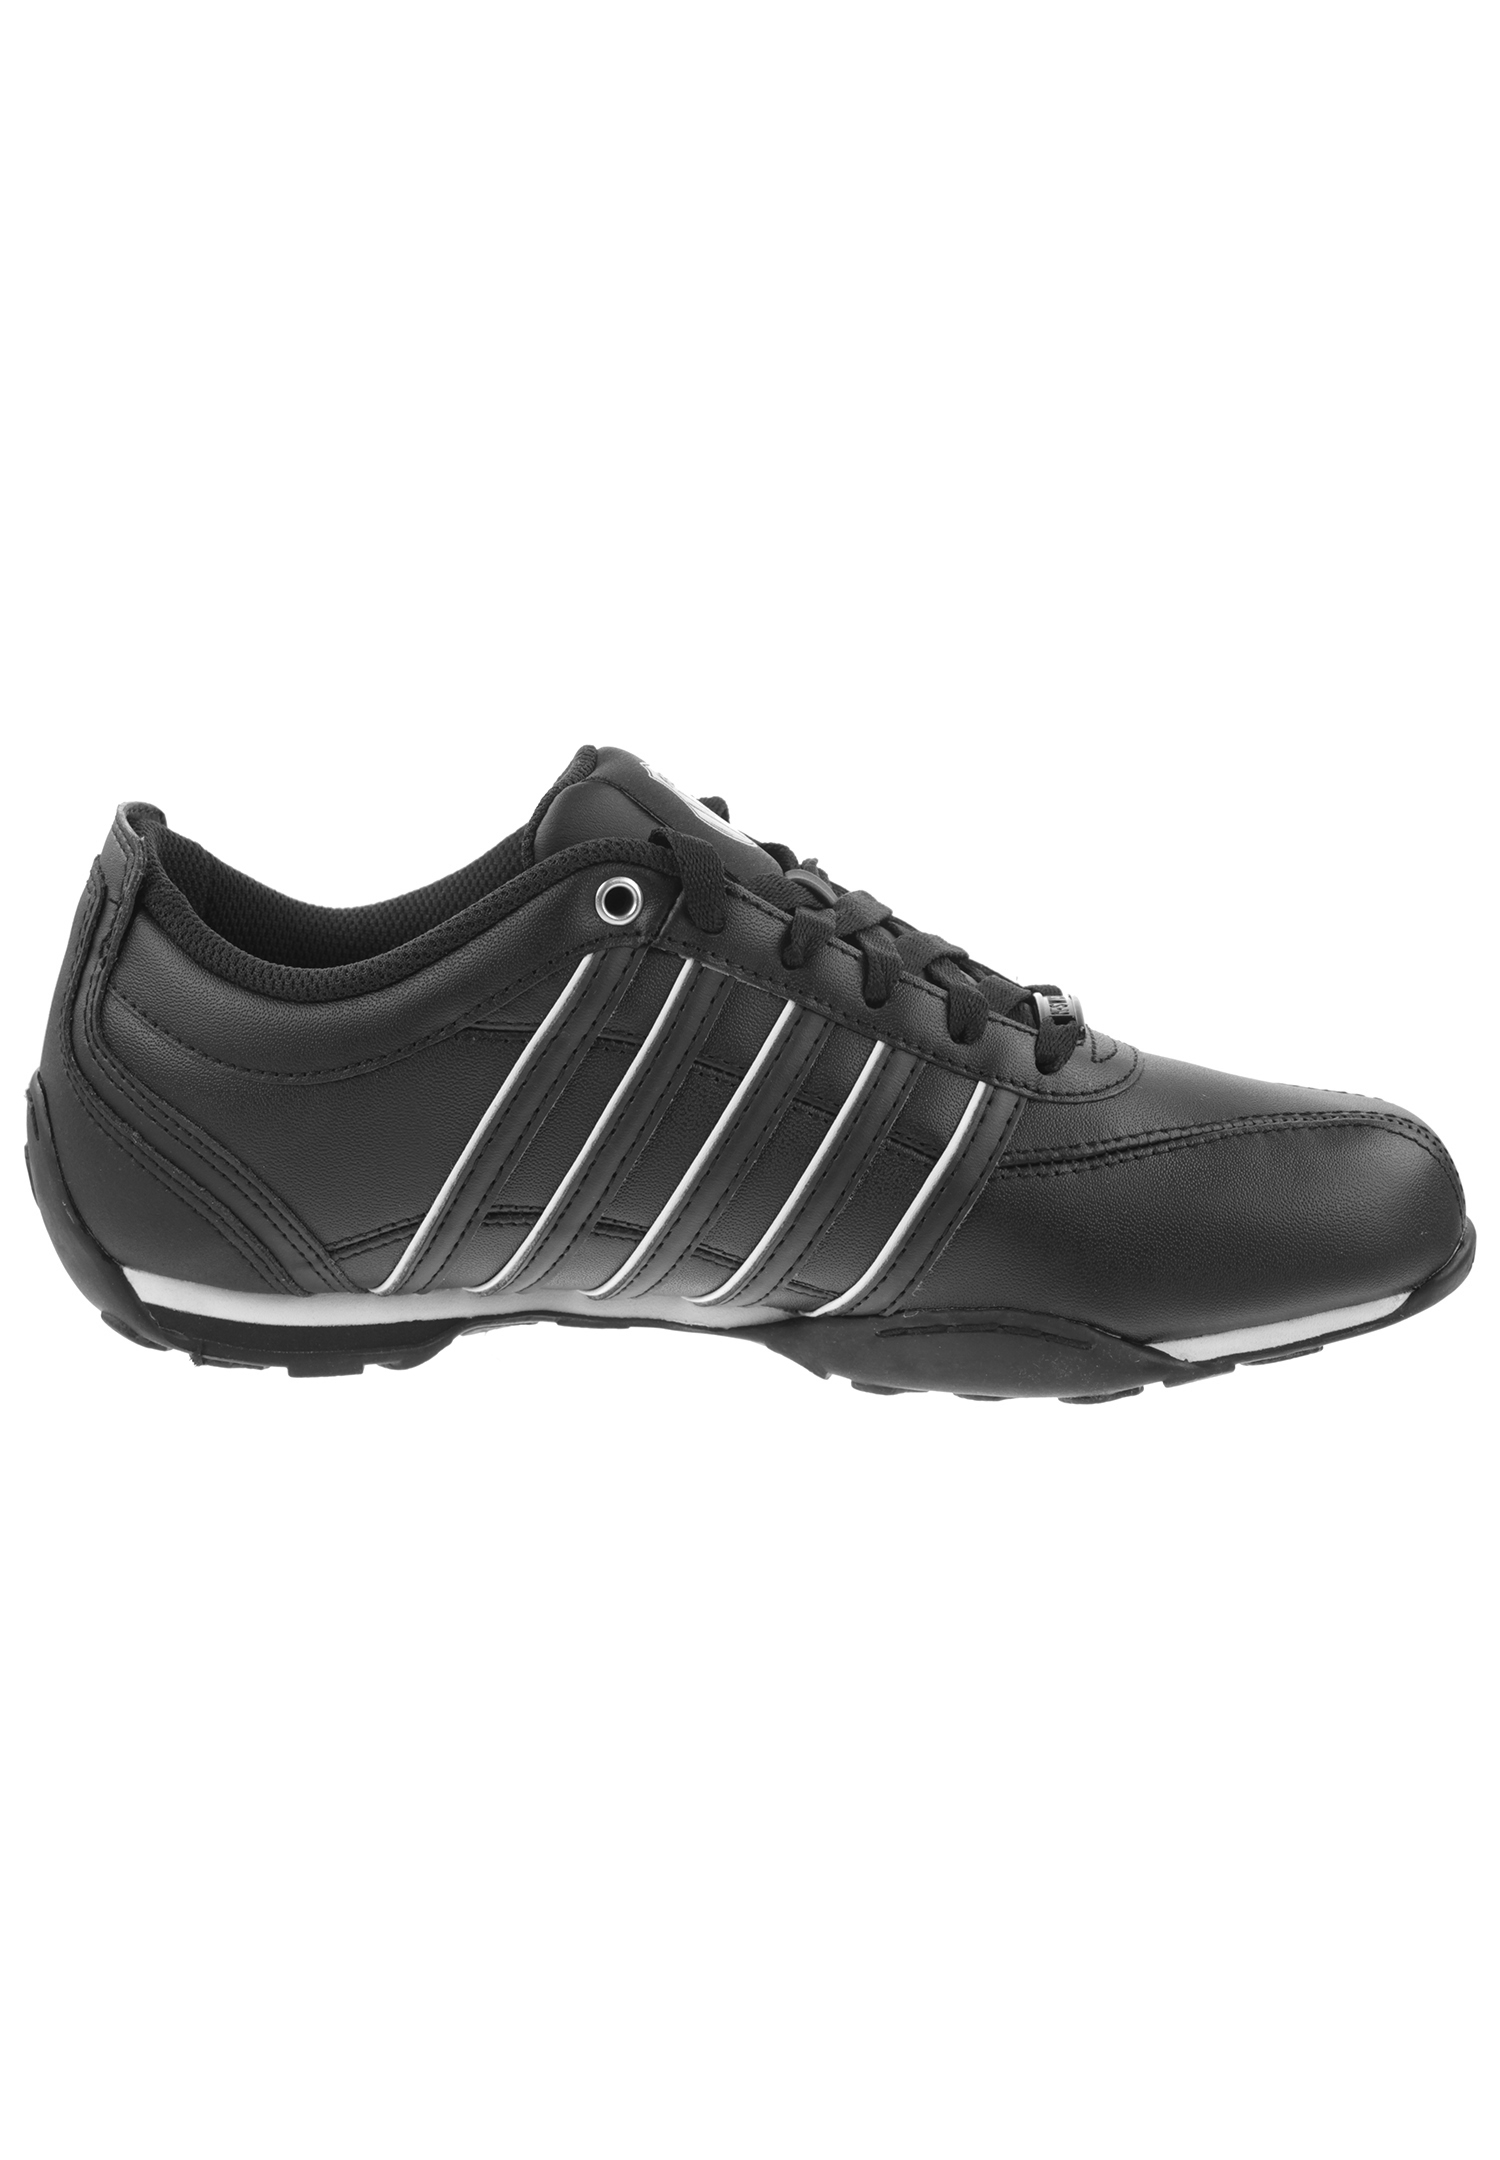 K-SWISS Arvee 1.5 Herren Sneaker Sportschuhe 02453-091-M schwarz weiss